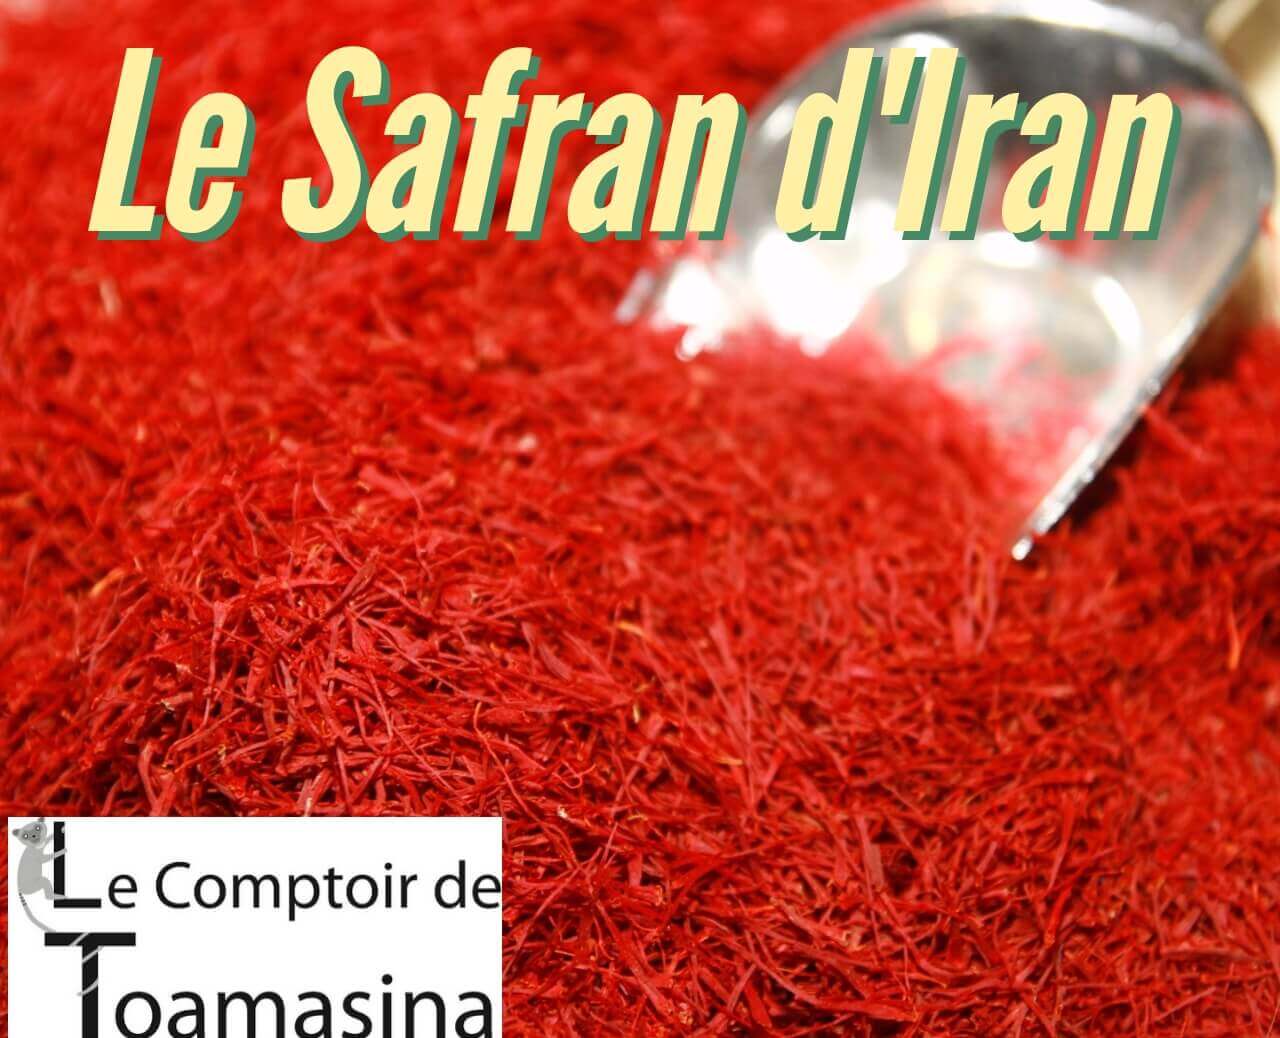 Wholesaler in Iranian Saffron - Buy Premium Saffron